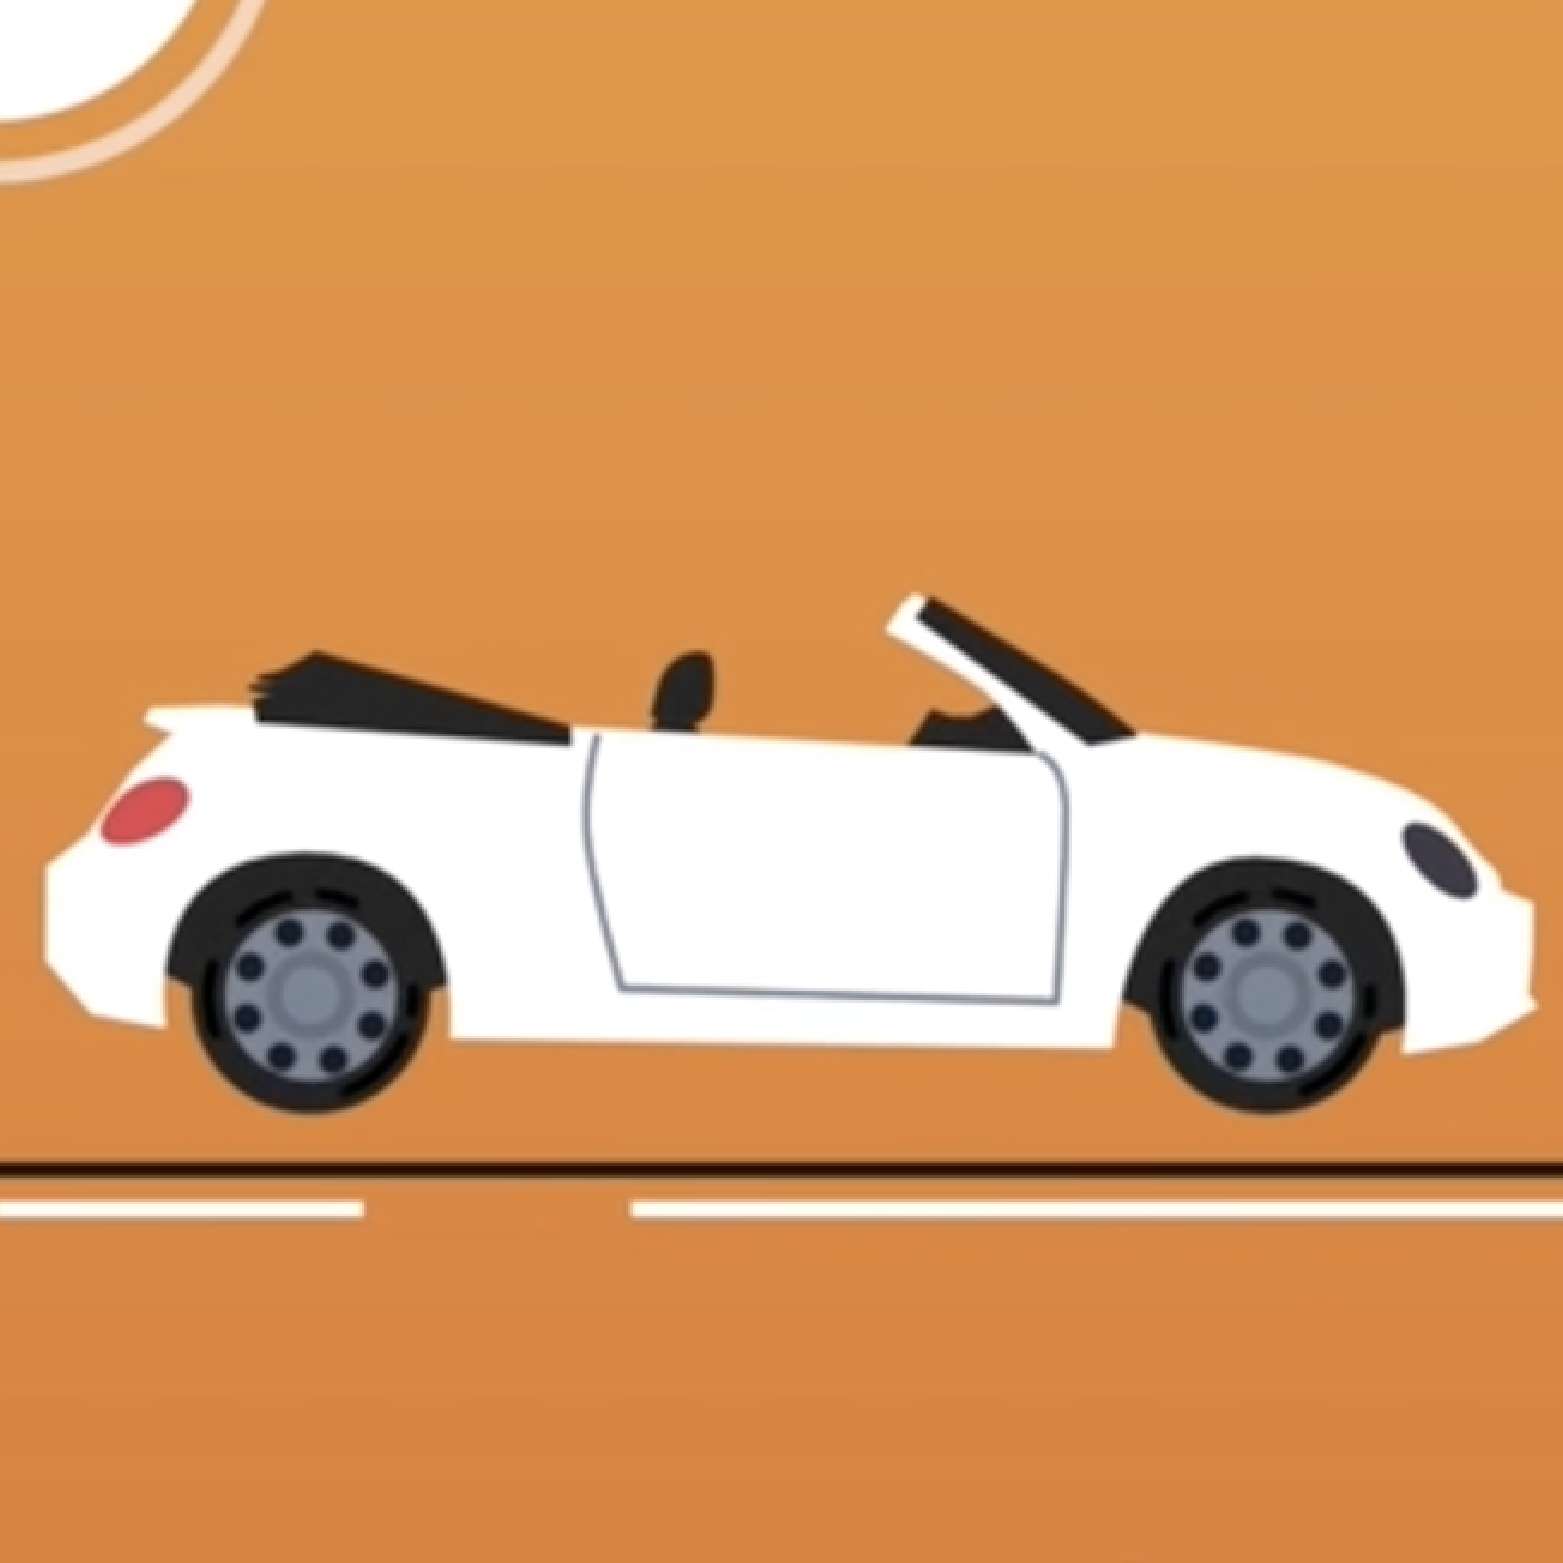 Squab Case Study Image - Reel Image of a Car